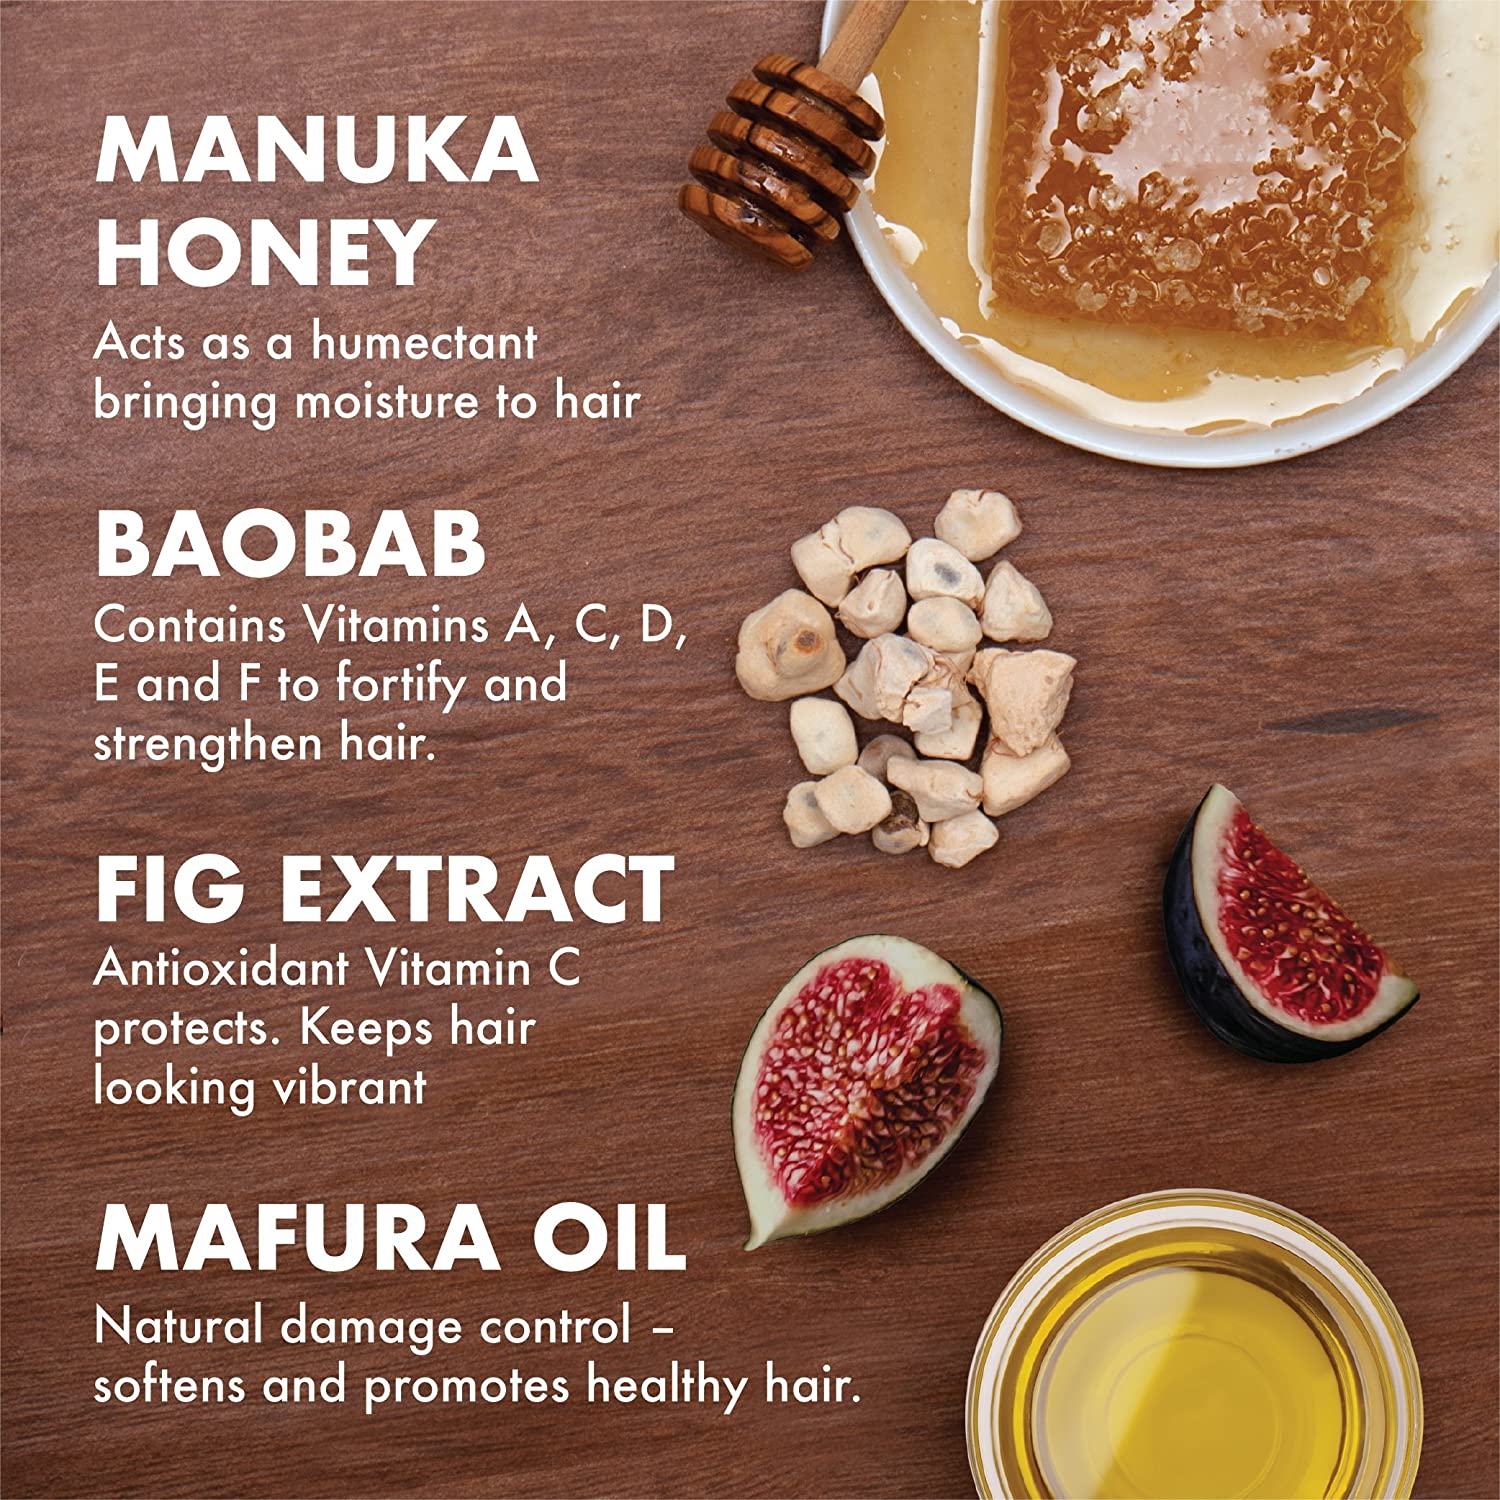 SHEA MOISTURE Manuka Honey And Mafura Oil Shampoo